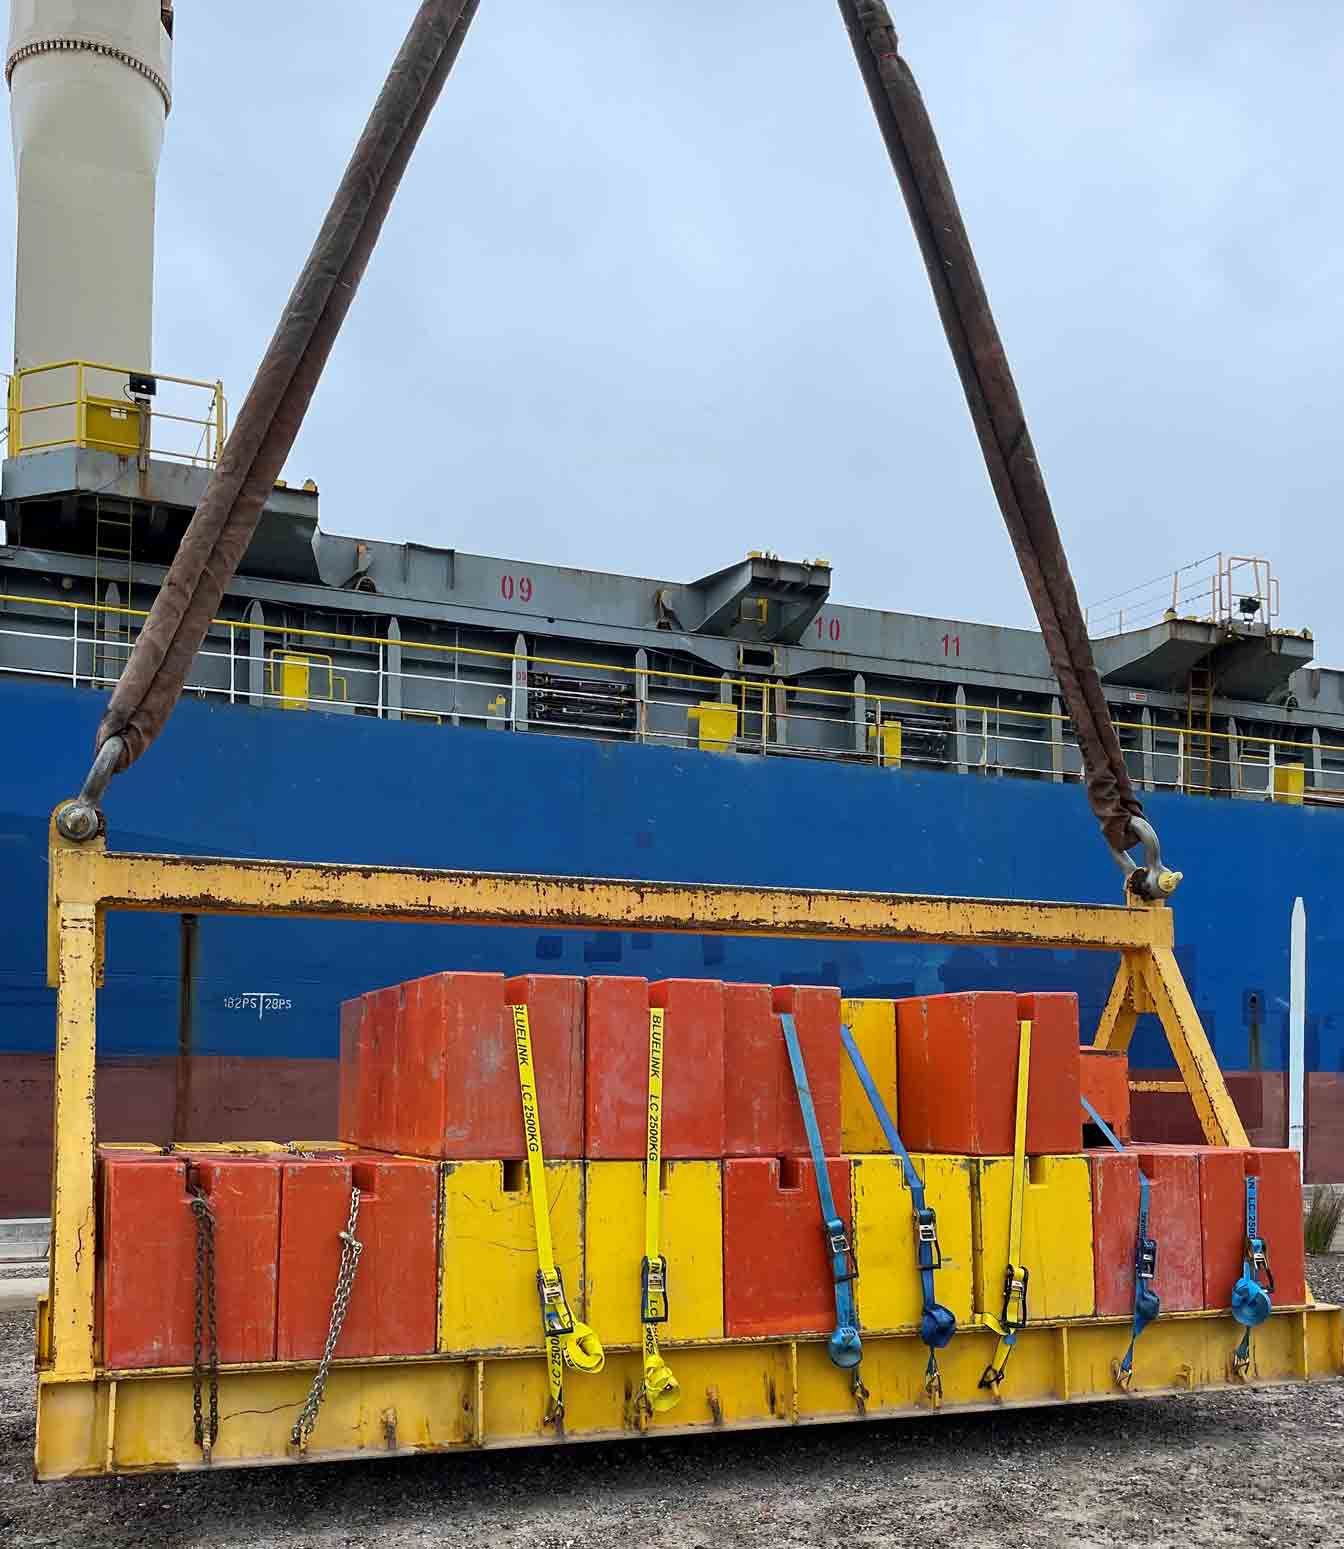 Ships deck crane load testing